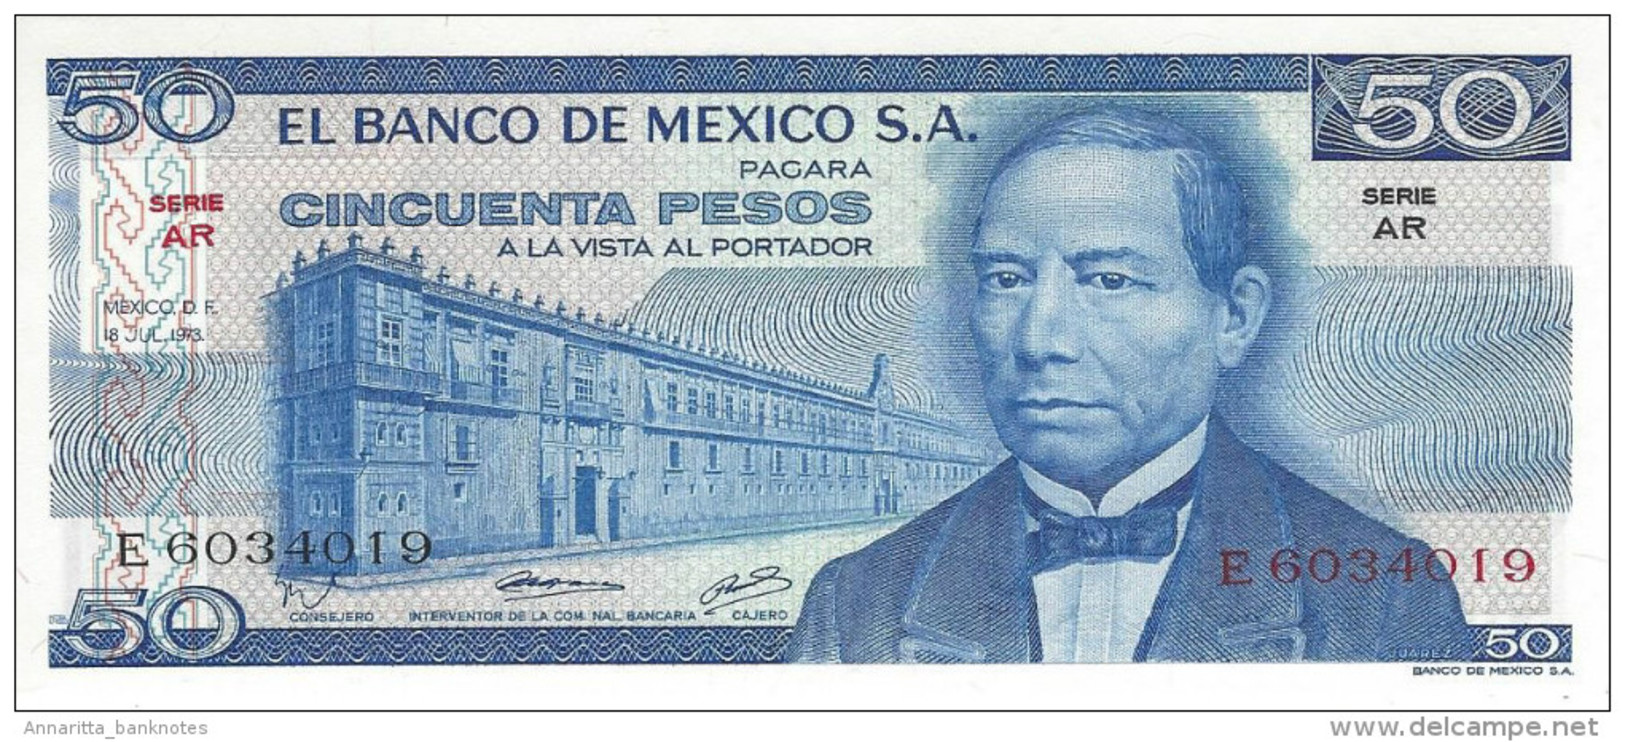 MEXICO 50 PESOS 1973 P-65a UNC SERIE AR [ MX065a ] - Mexico